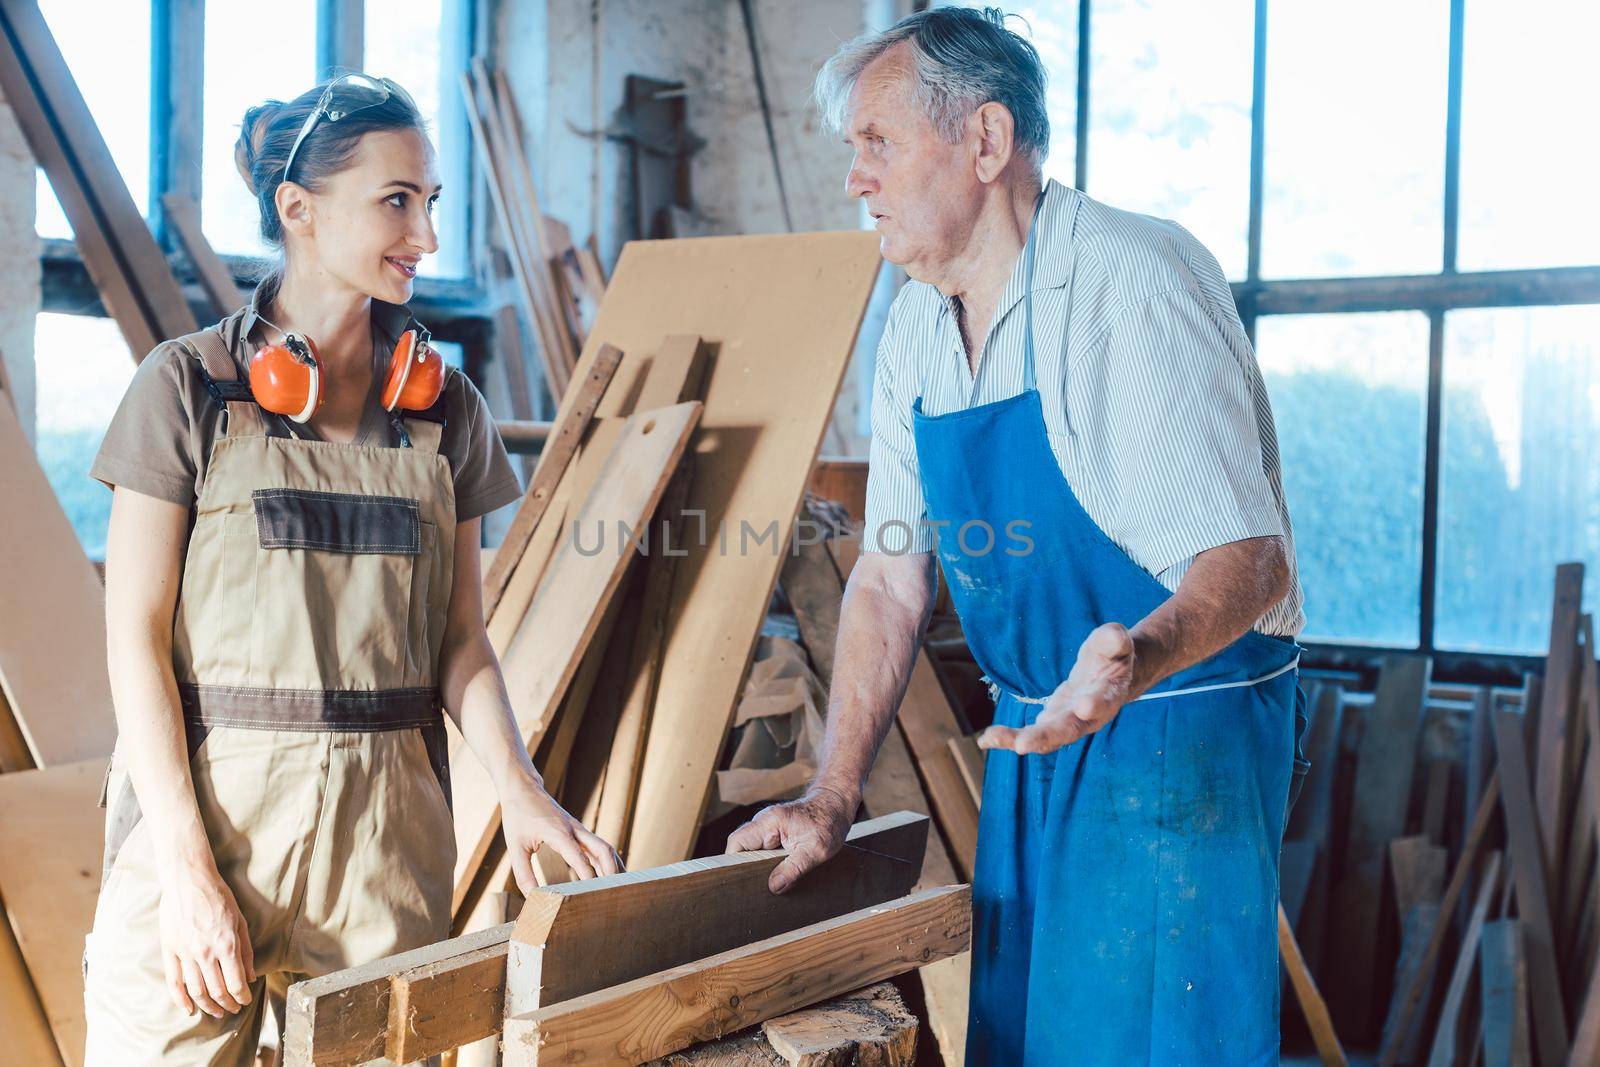 Senior carpenter sharing wisdom with younger aspiring colleague by Kzenon